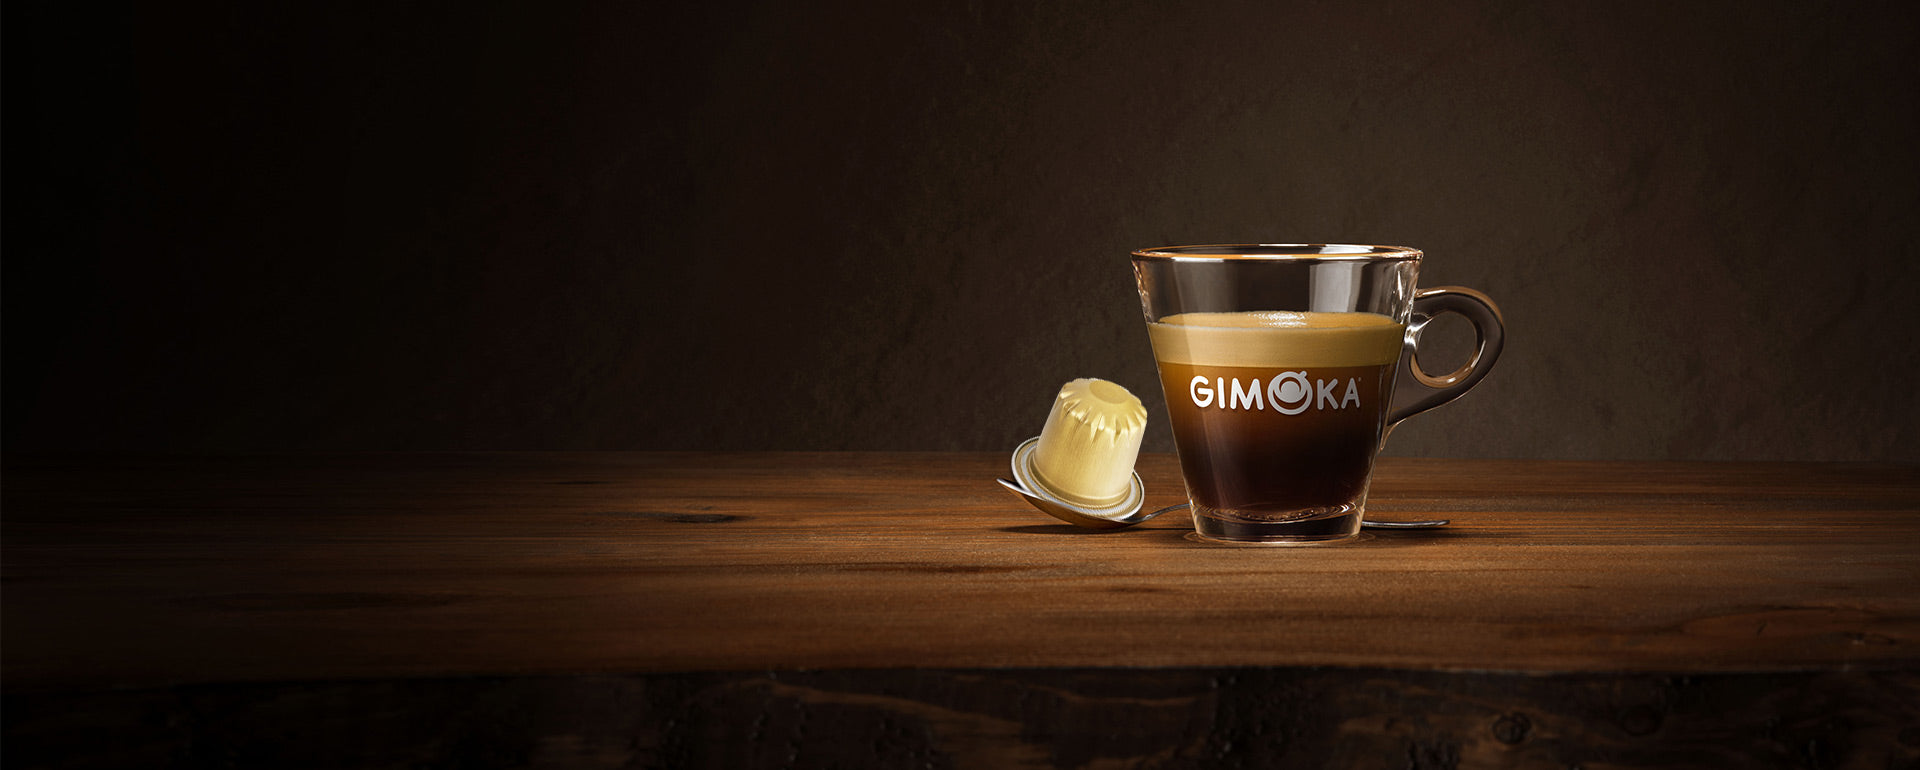 Gimoka Italian Coffee Capsules and Pods